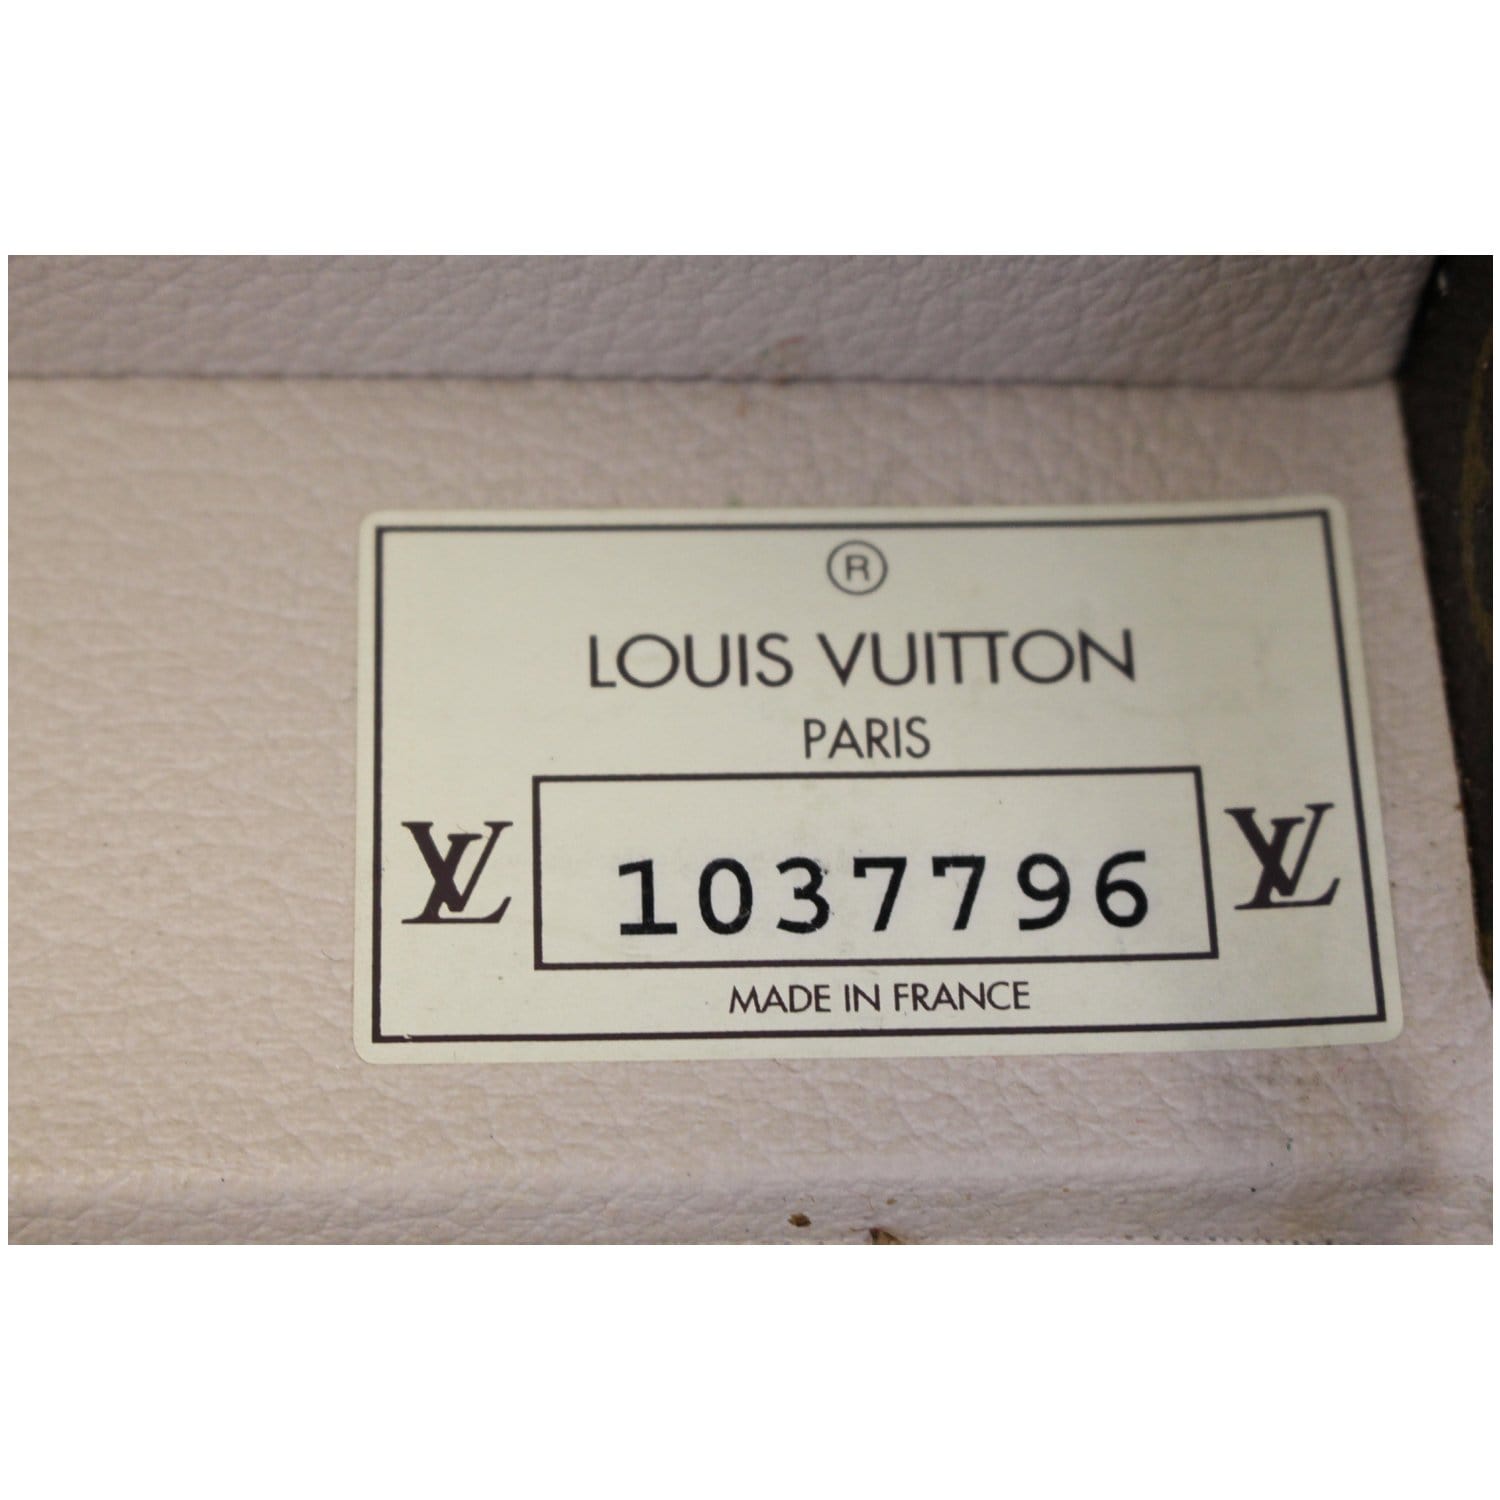 LOUIS VUITTON  BOX PHARMACIE TRAVEL CASE IN